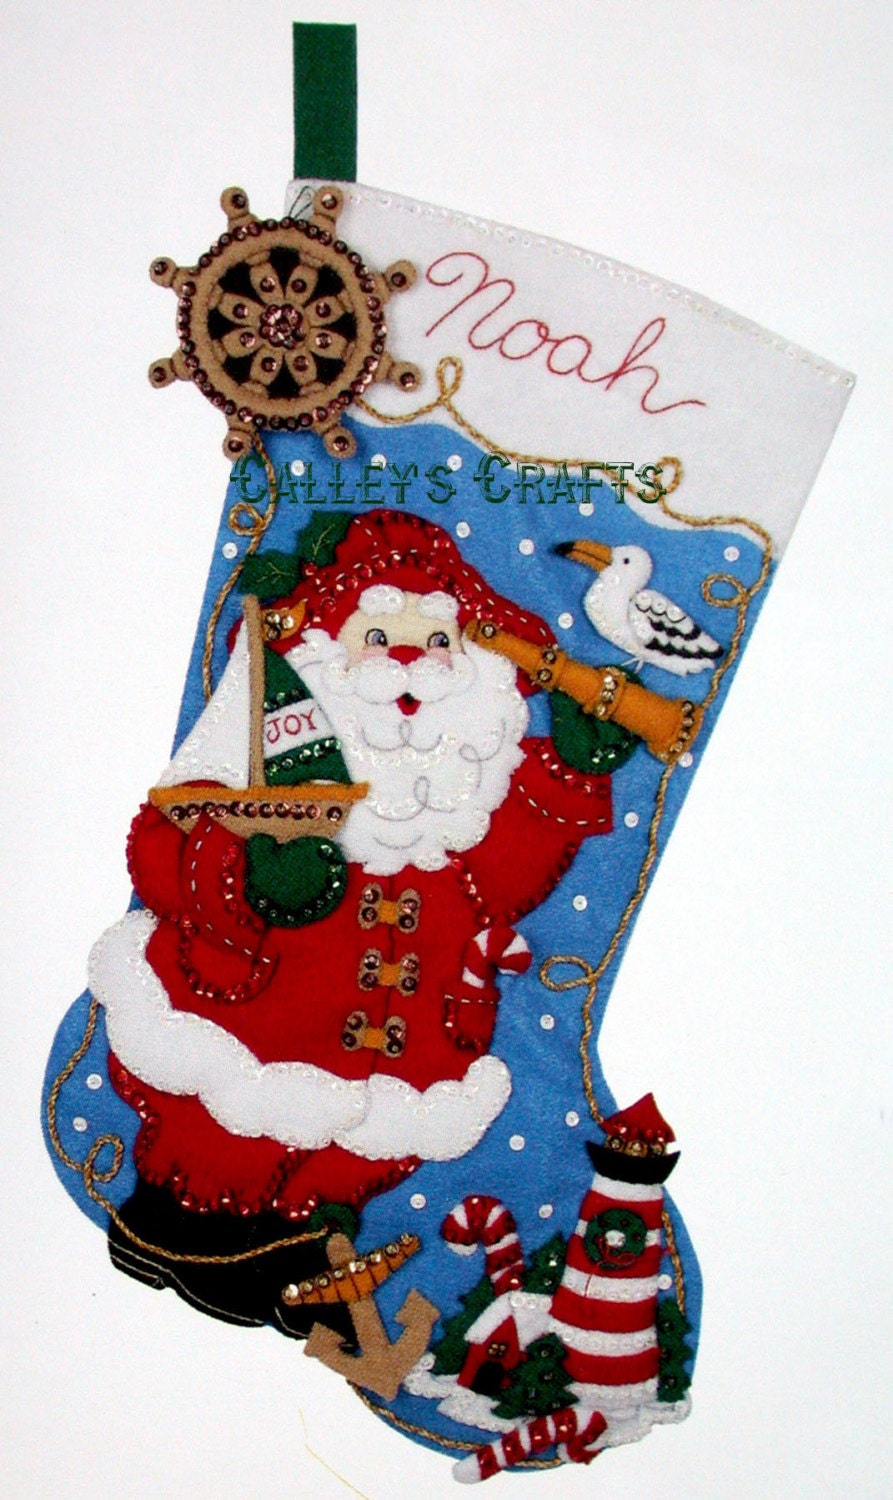 Bucilla Shopping Spree 18 Felt Christmas Stocking Kit 85433 Red